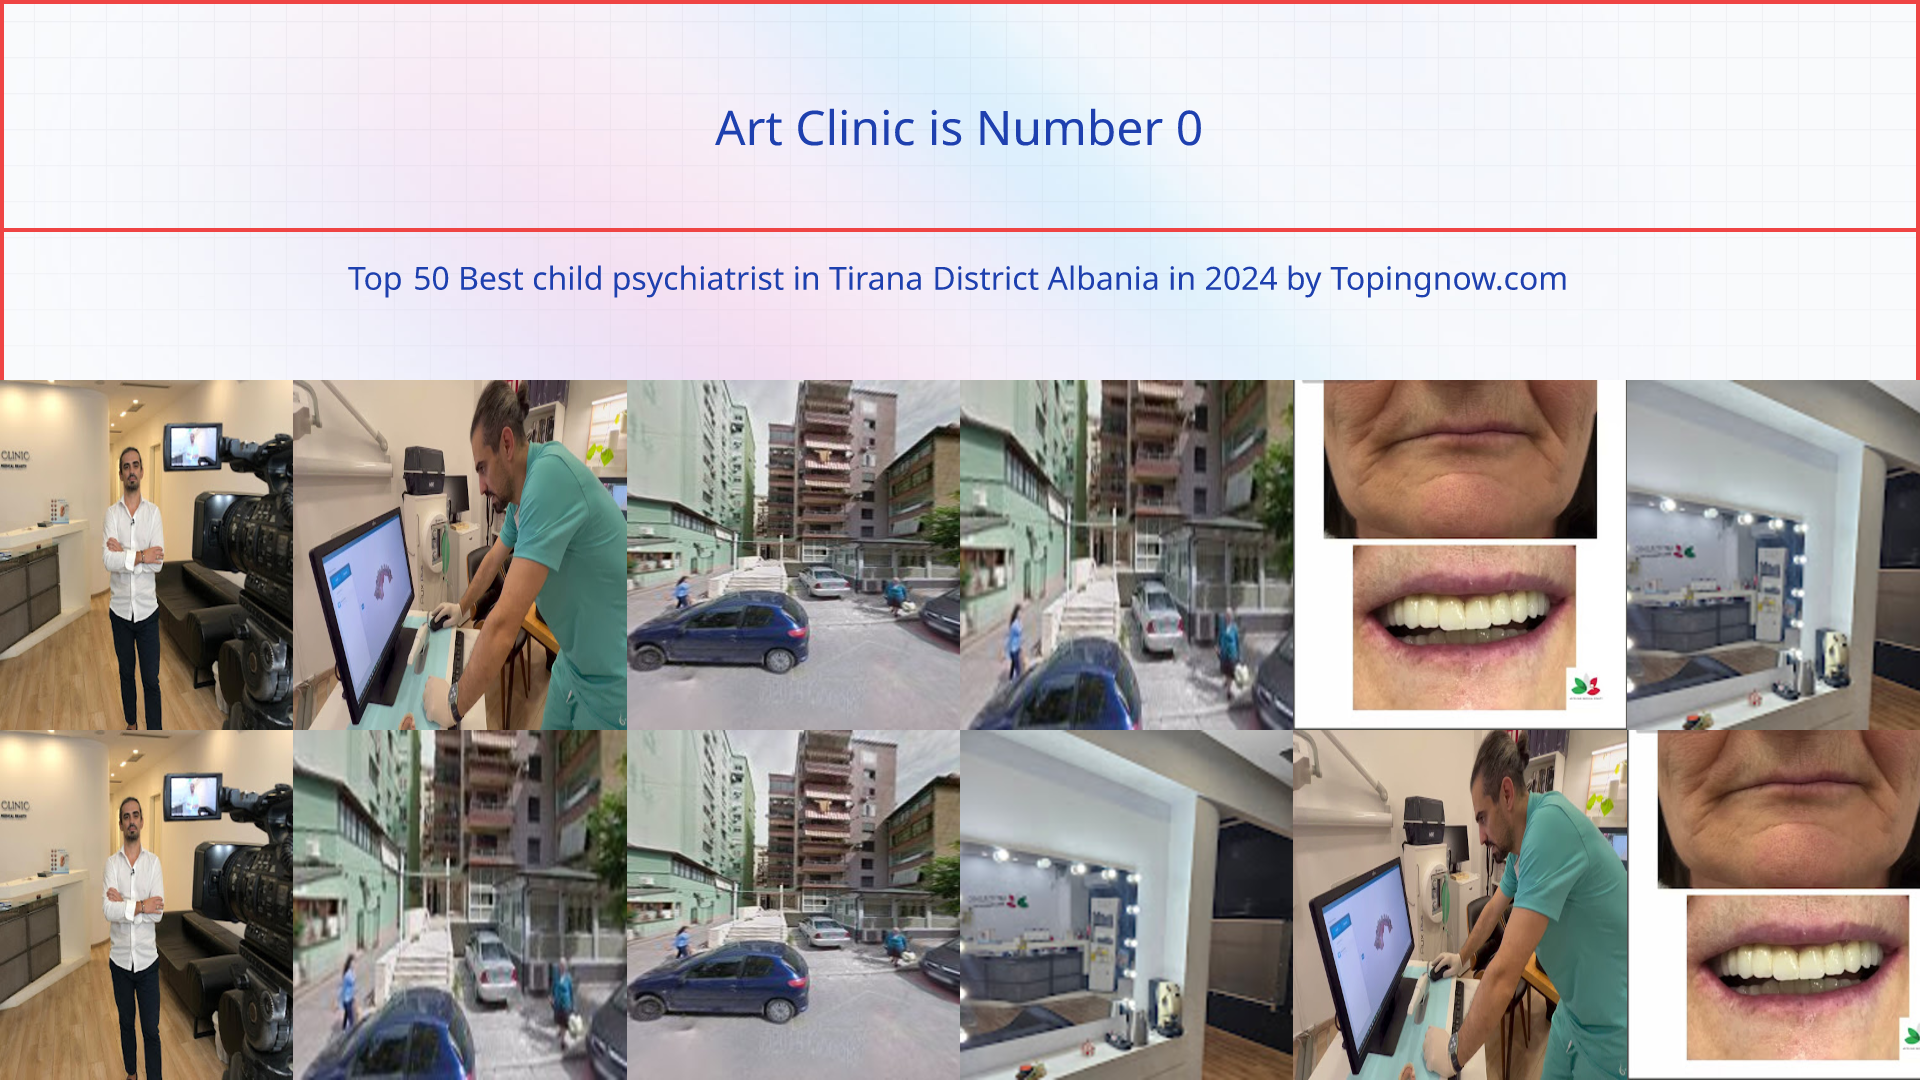 Art Clinic: Top 50 Best child psychiatrist in Tirana District Albania in 2024